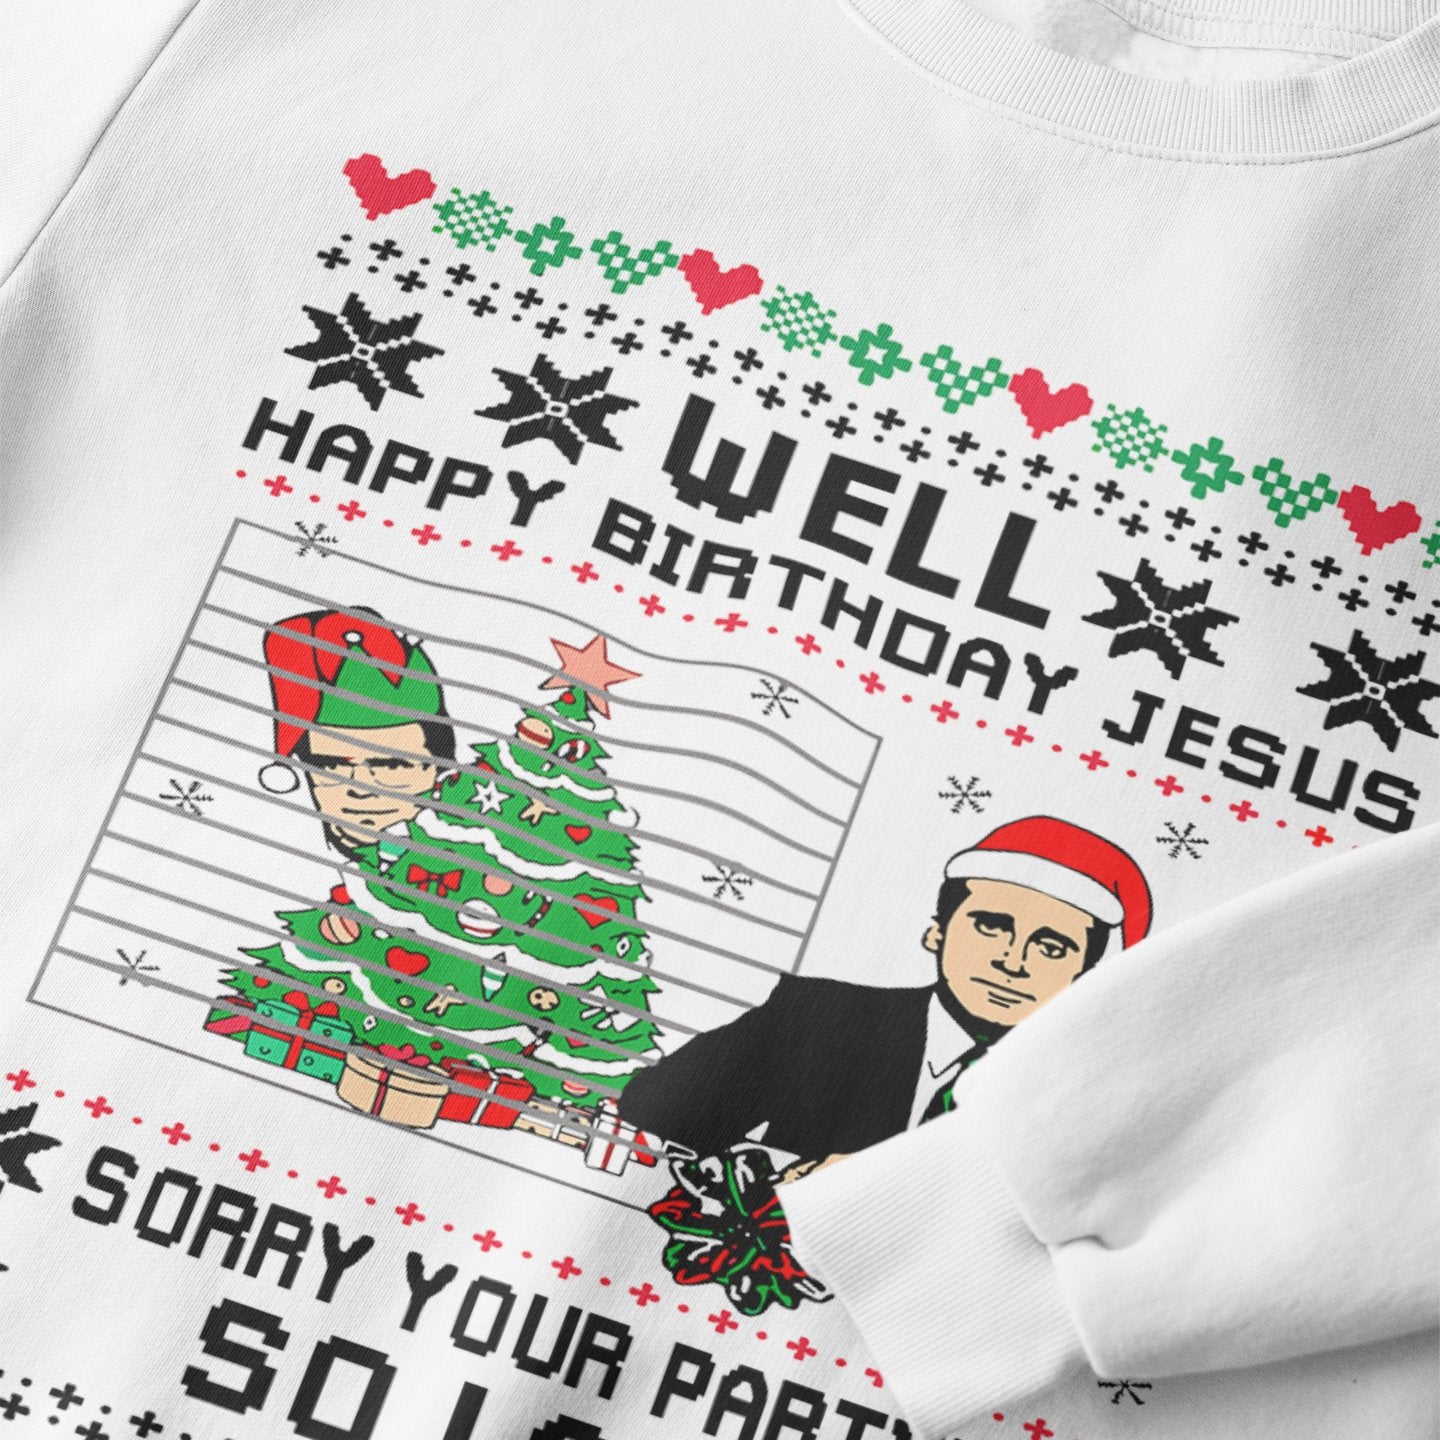 Well Happy Birthday Jesus - Sweatshirt